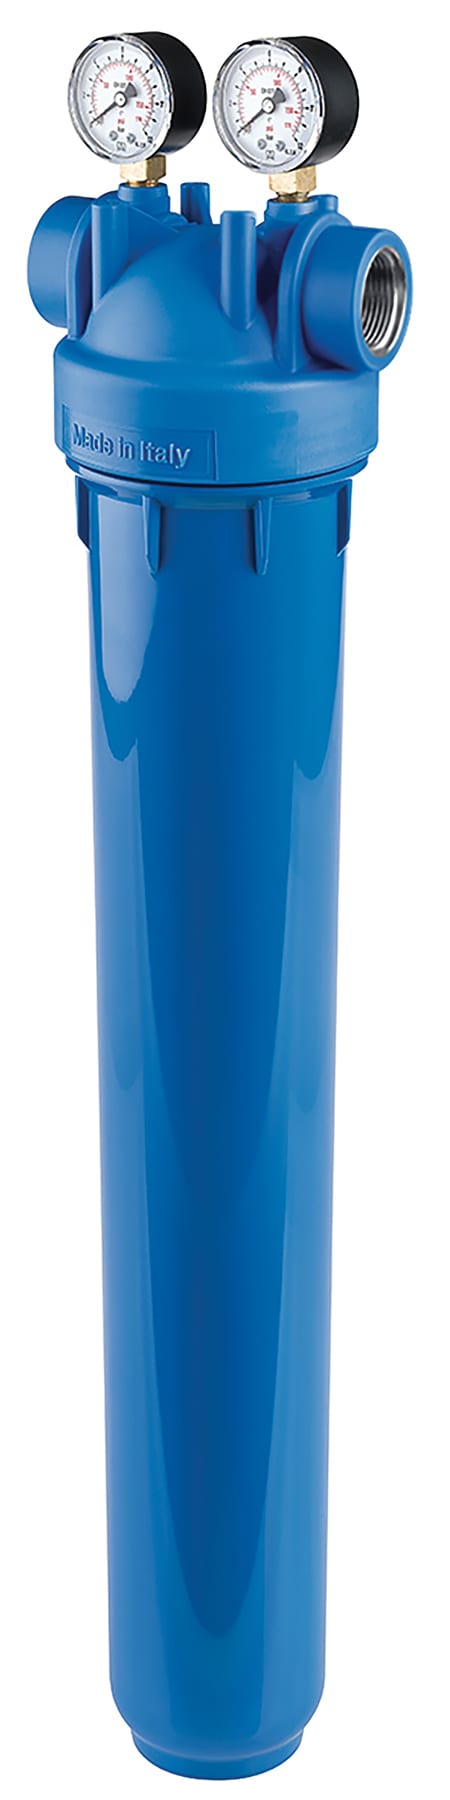 Water bottle, Drinkware, Liquid, Blue, Azure, Sleeve, Aqua